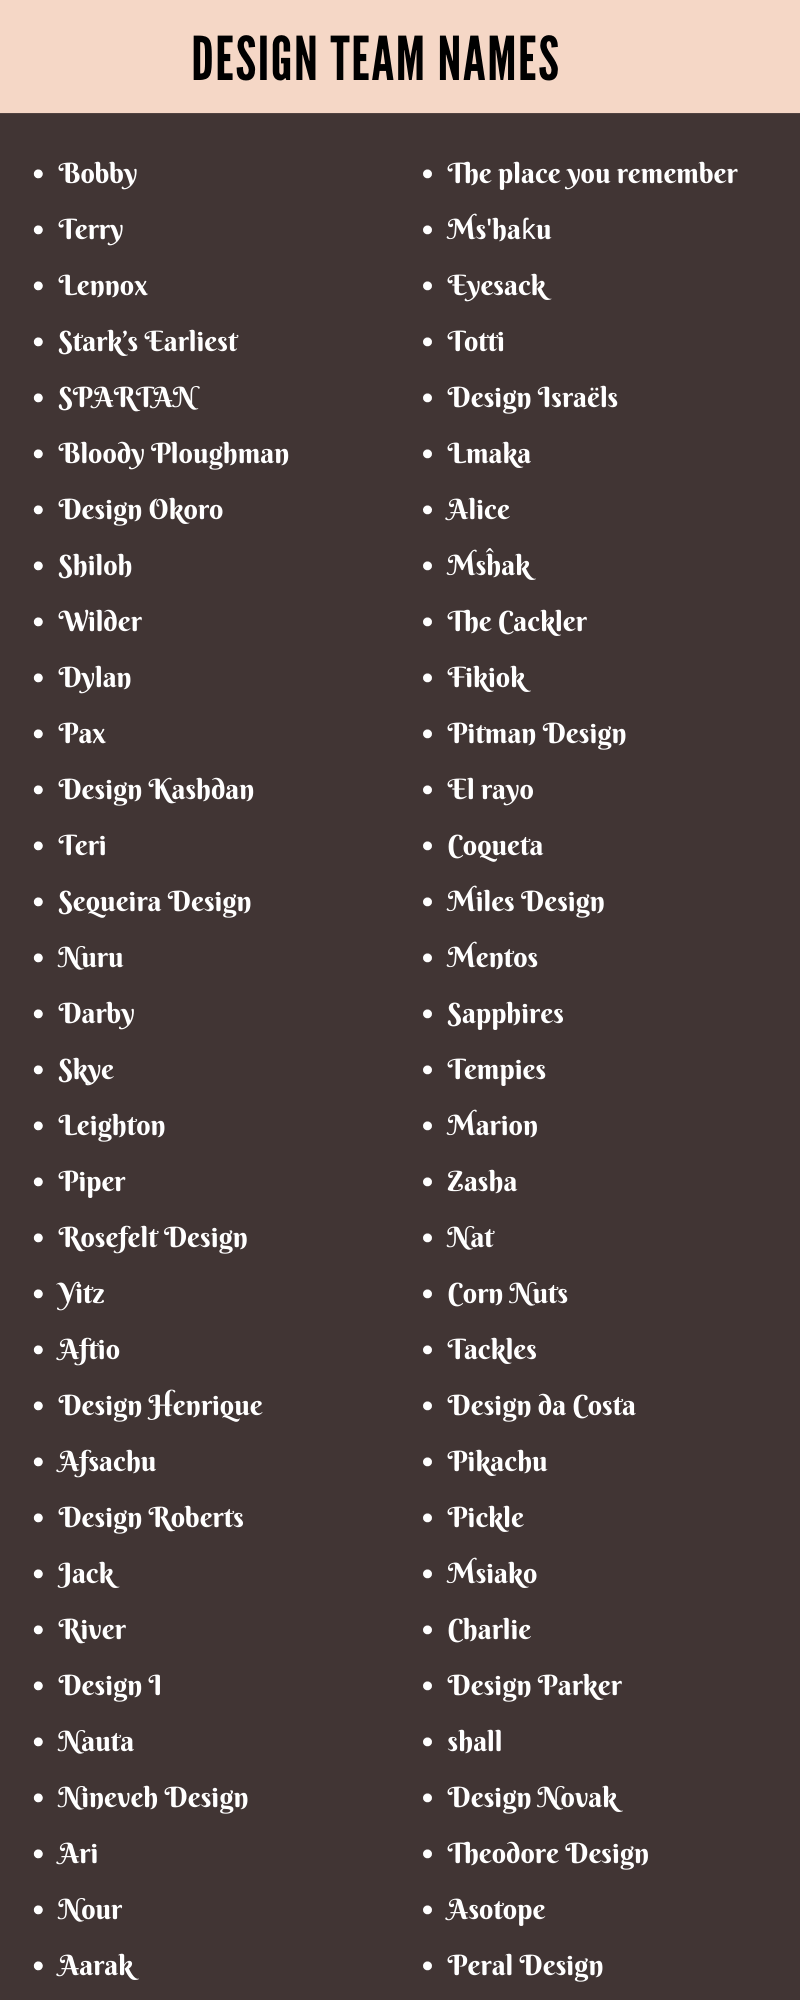 Design Team Names